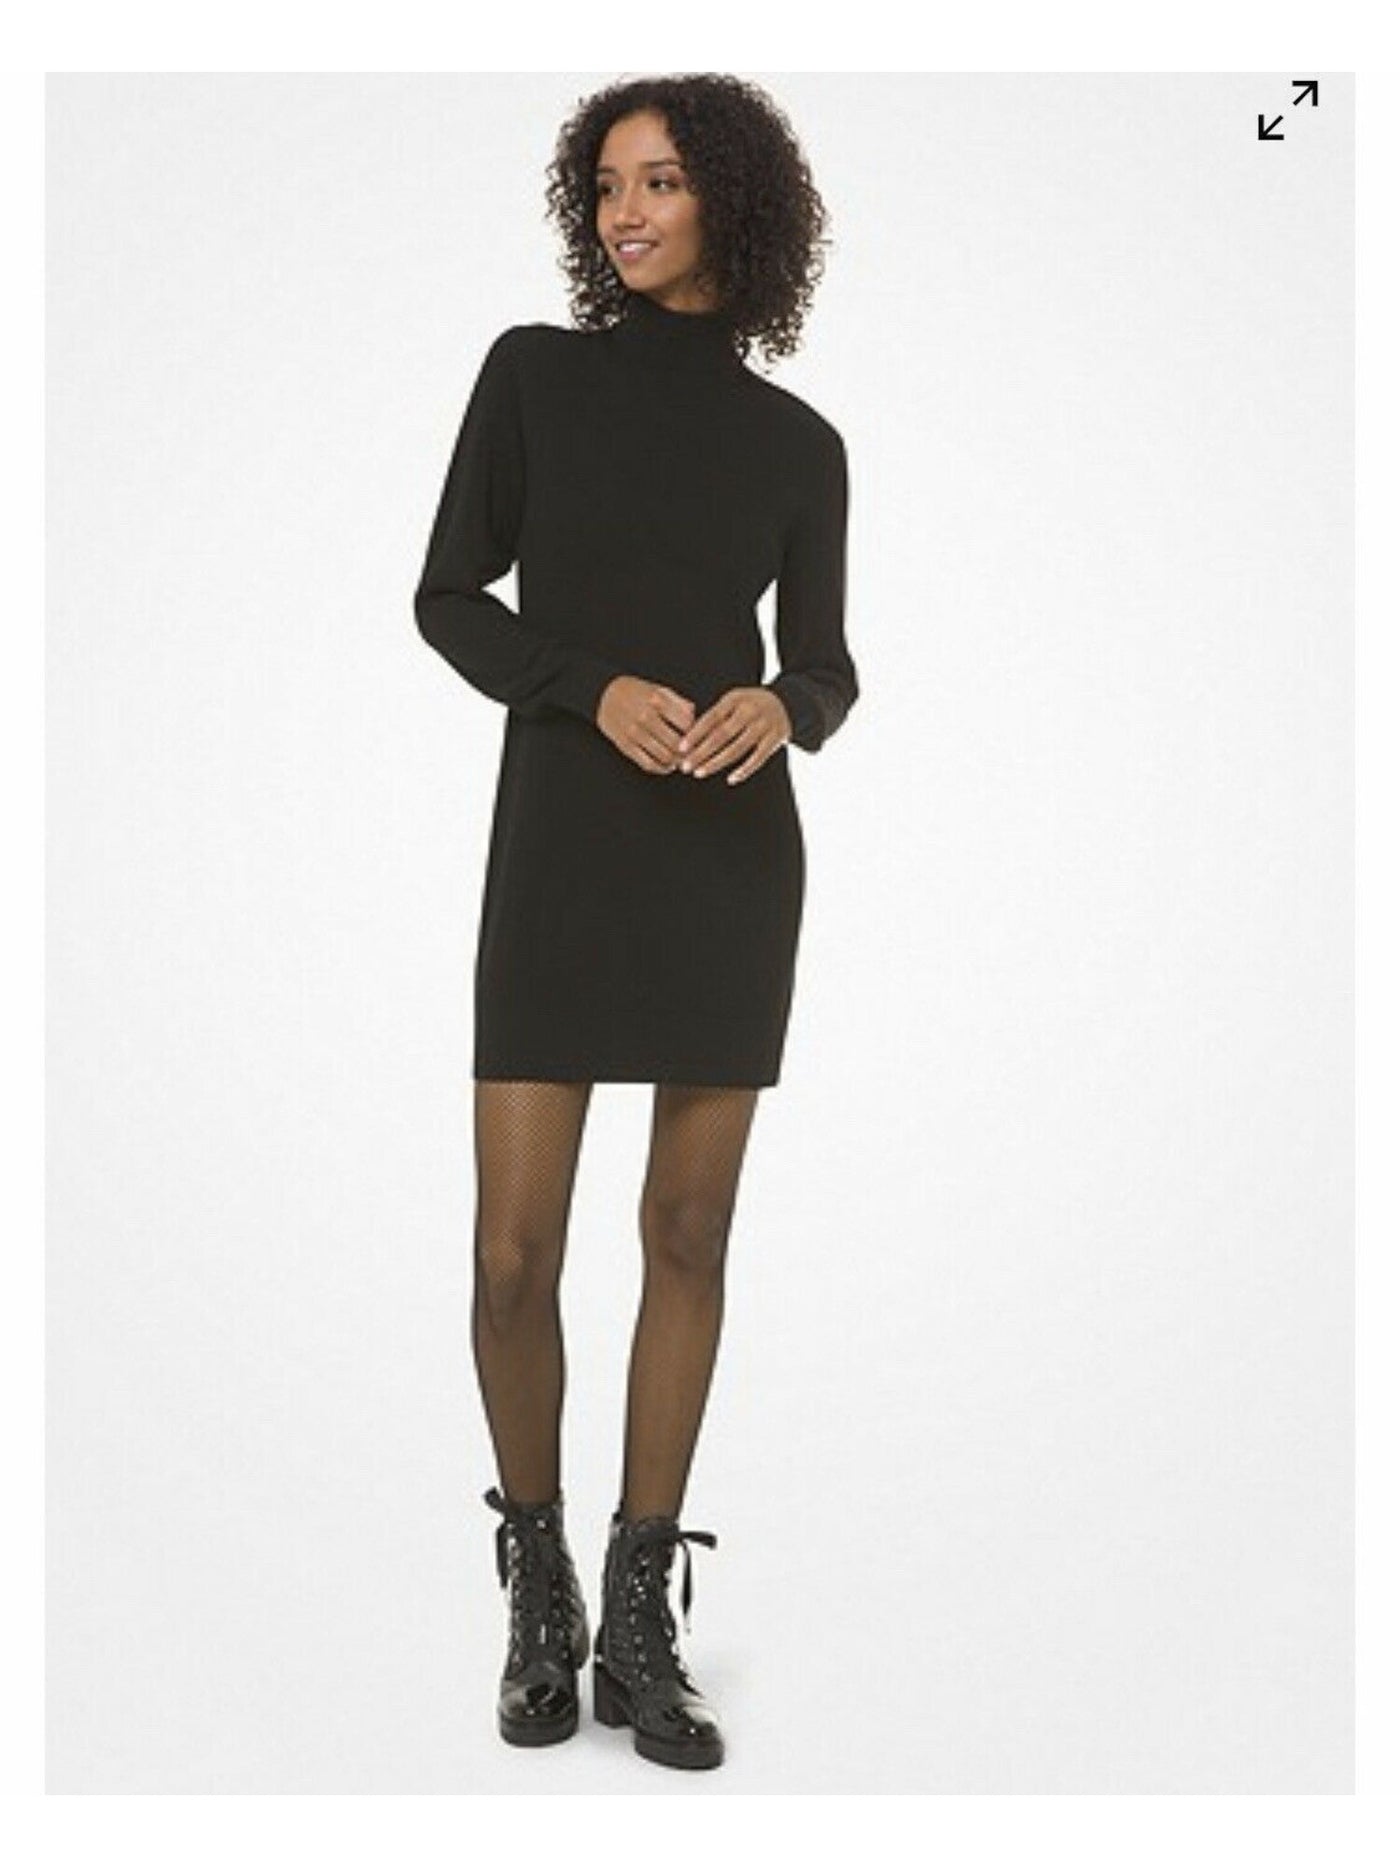 MICHAEL KORS Womens Black Long Sleeve Mini Body Con Dress XS